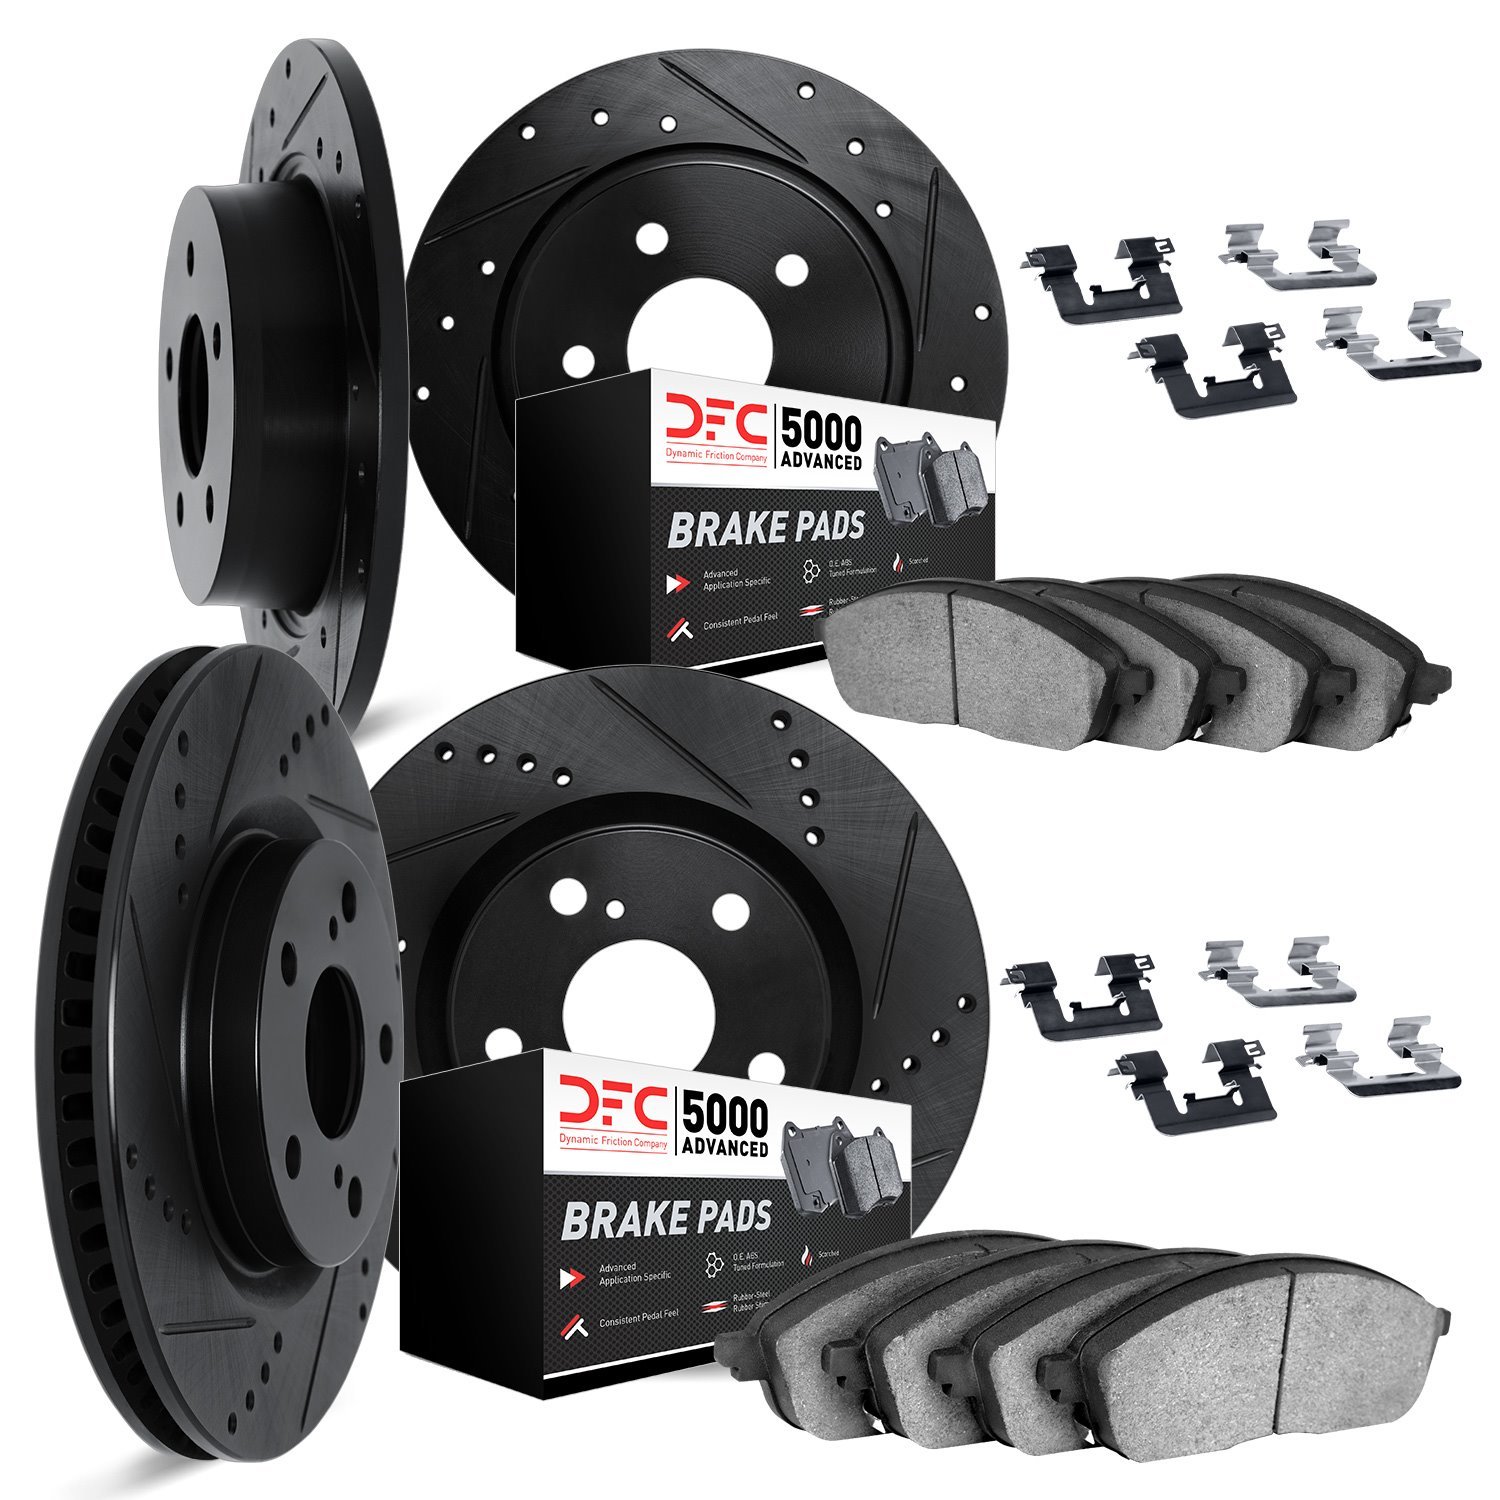 8514-75005 Drilled/Slotted Brake Rotors w/5000 Advanced Brake Pads Kit & Hardware [Black], 2014-2015 Lexus/Toyota/Scion, Positio